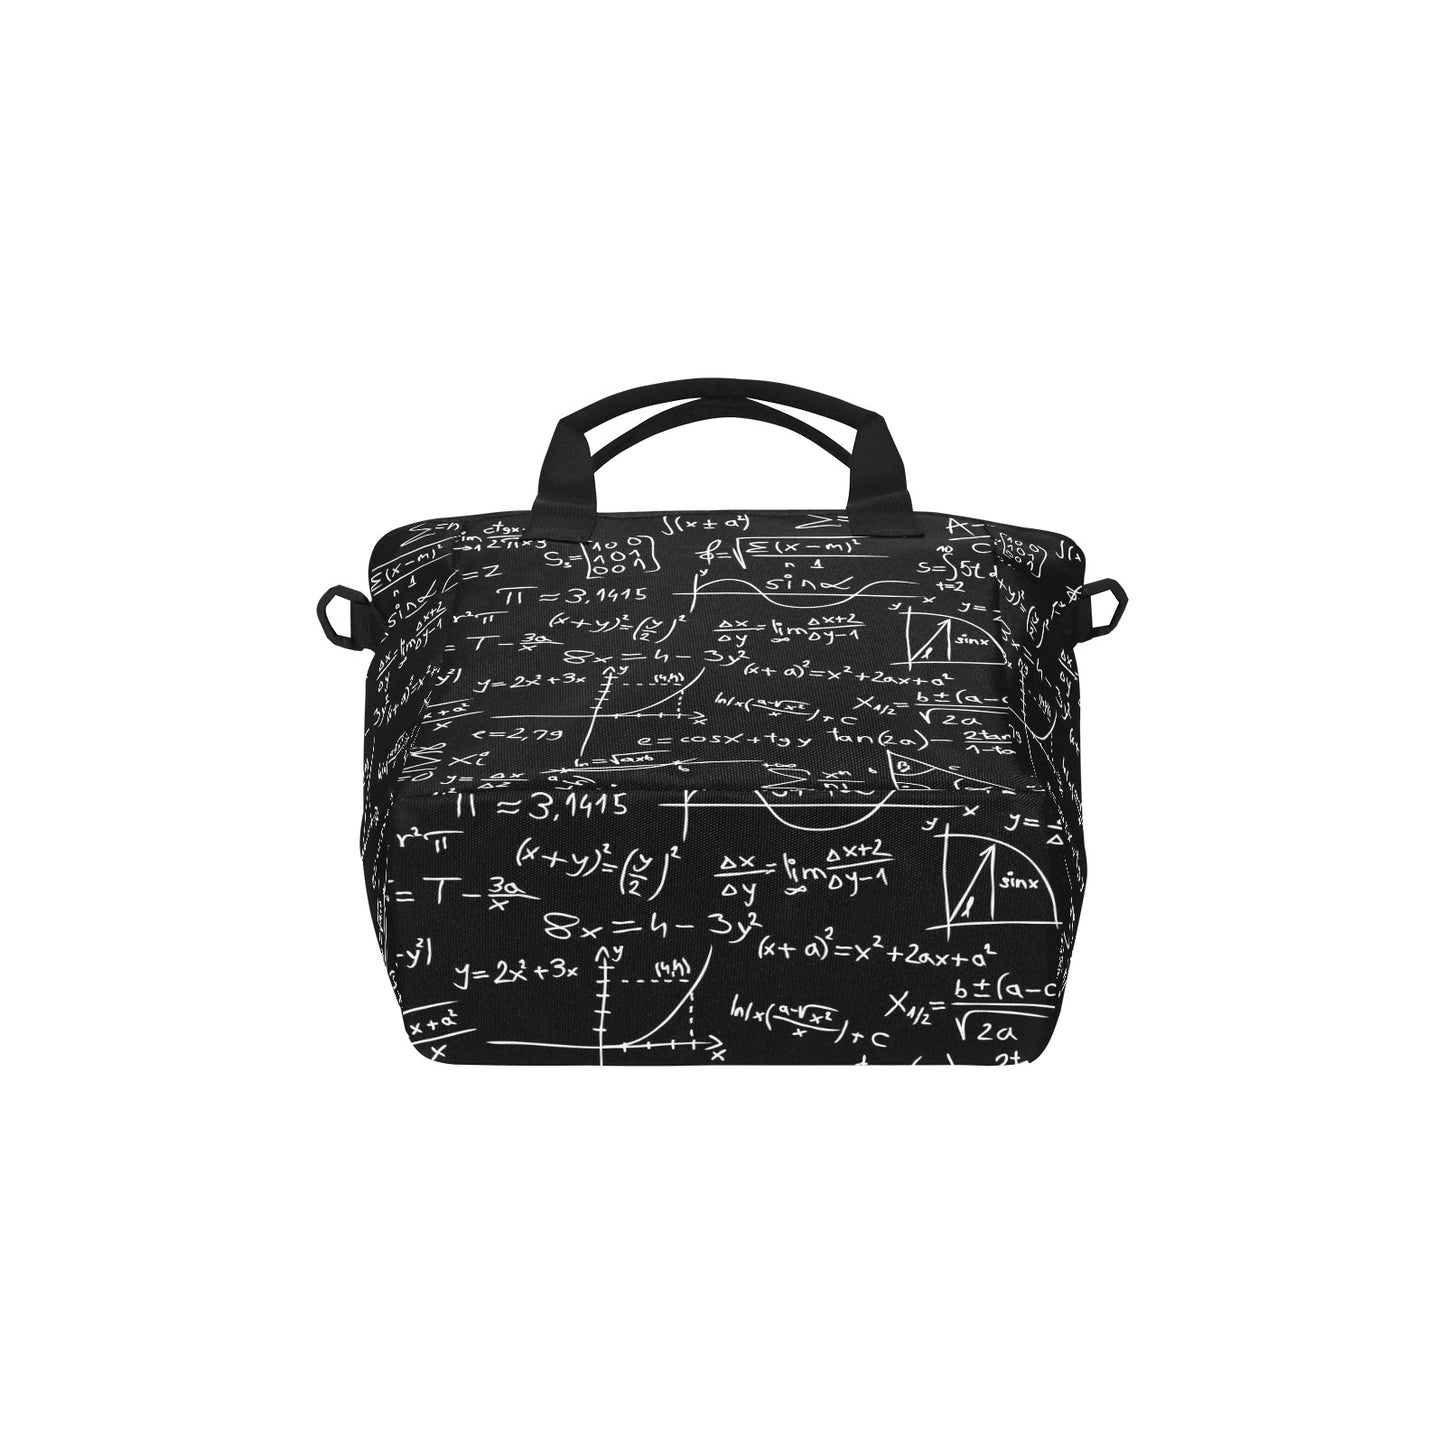 Equations - Tote Bag with Shoulder Strap Nylon Tote Bag